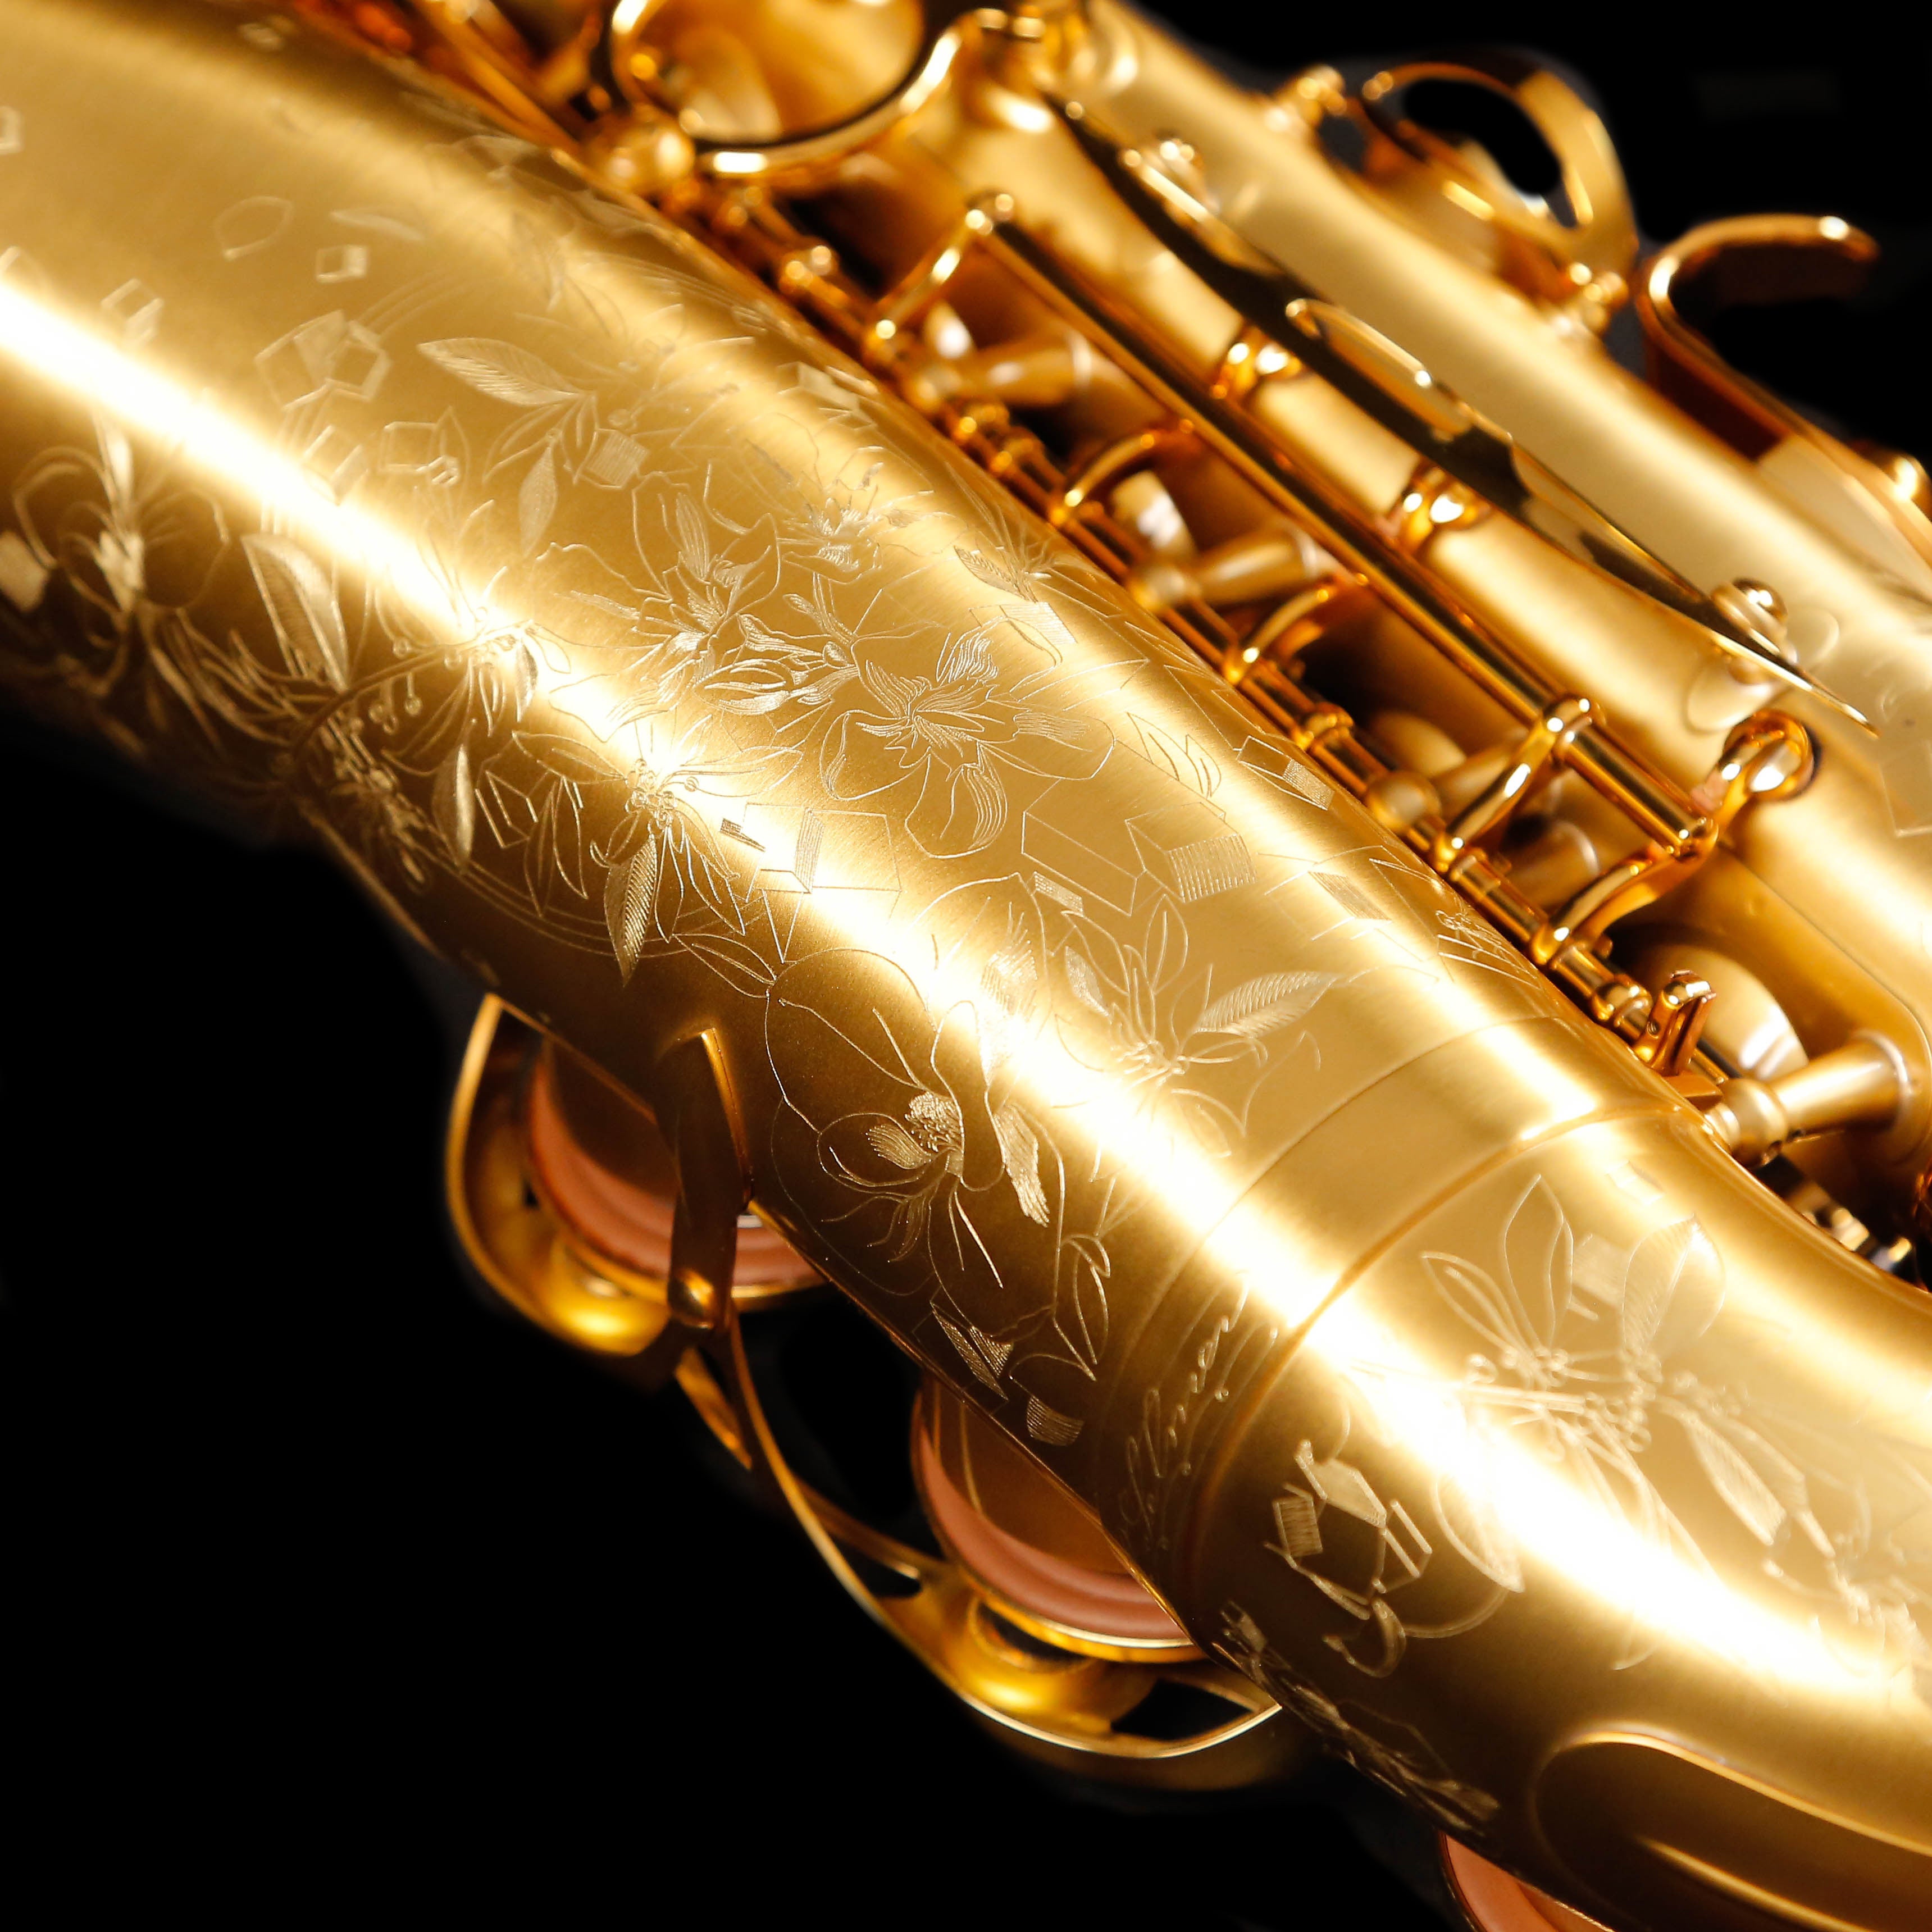 Selmer Paris 92M Supreme Alto Saxophone, Matte NEW HOT MODEL!!!